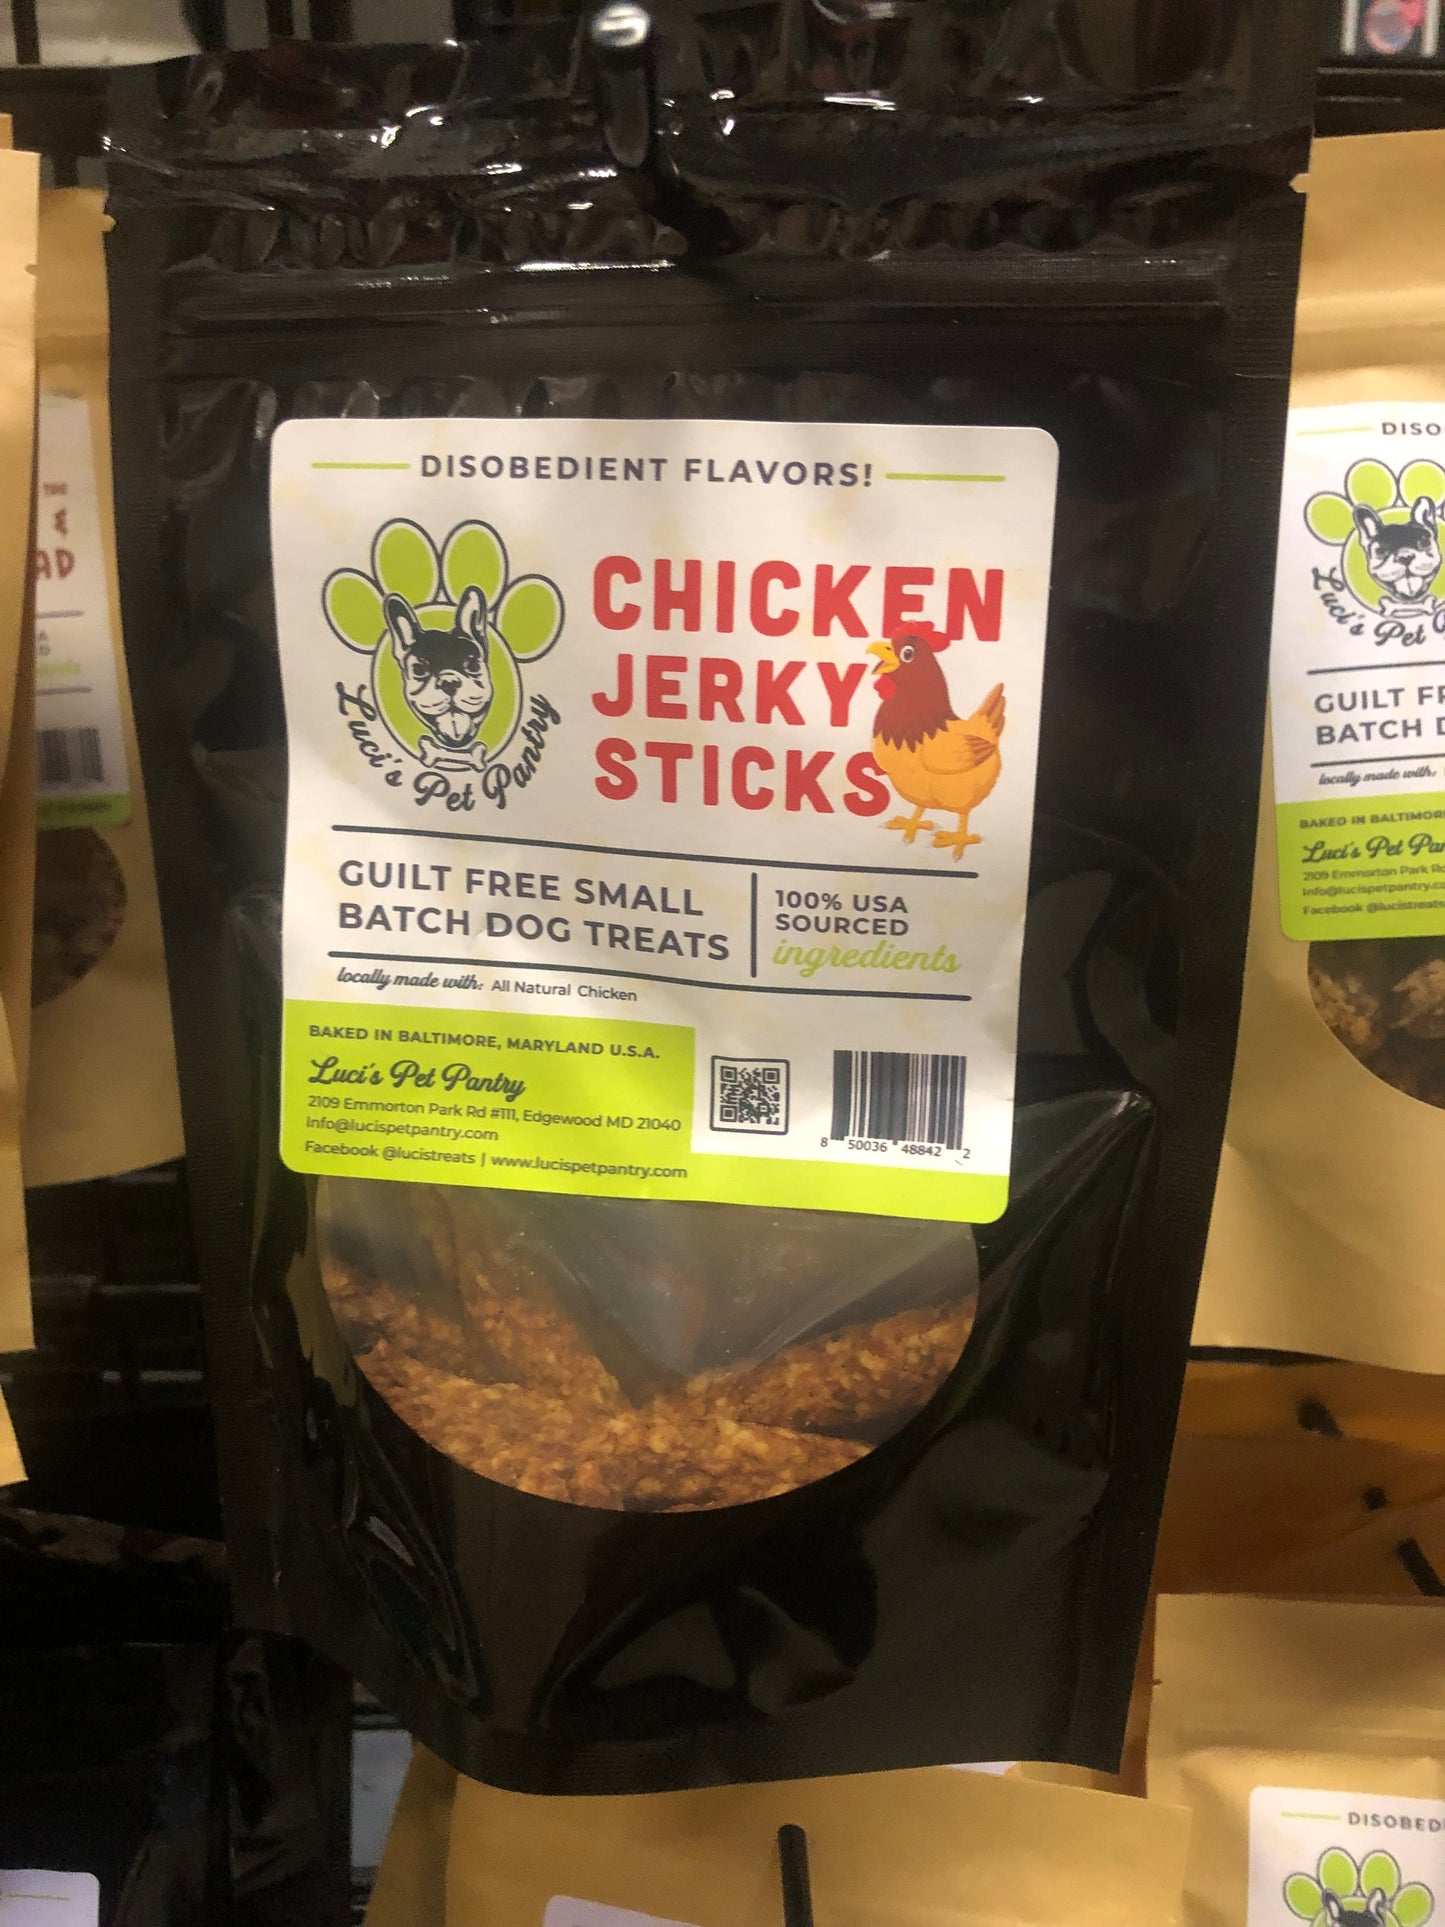 Turkey Sticks - All Natural Single Ingredient Dog & Puppy Jerky Treats - 2 oz. Pouch